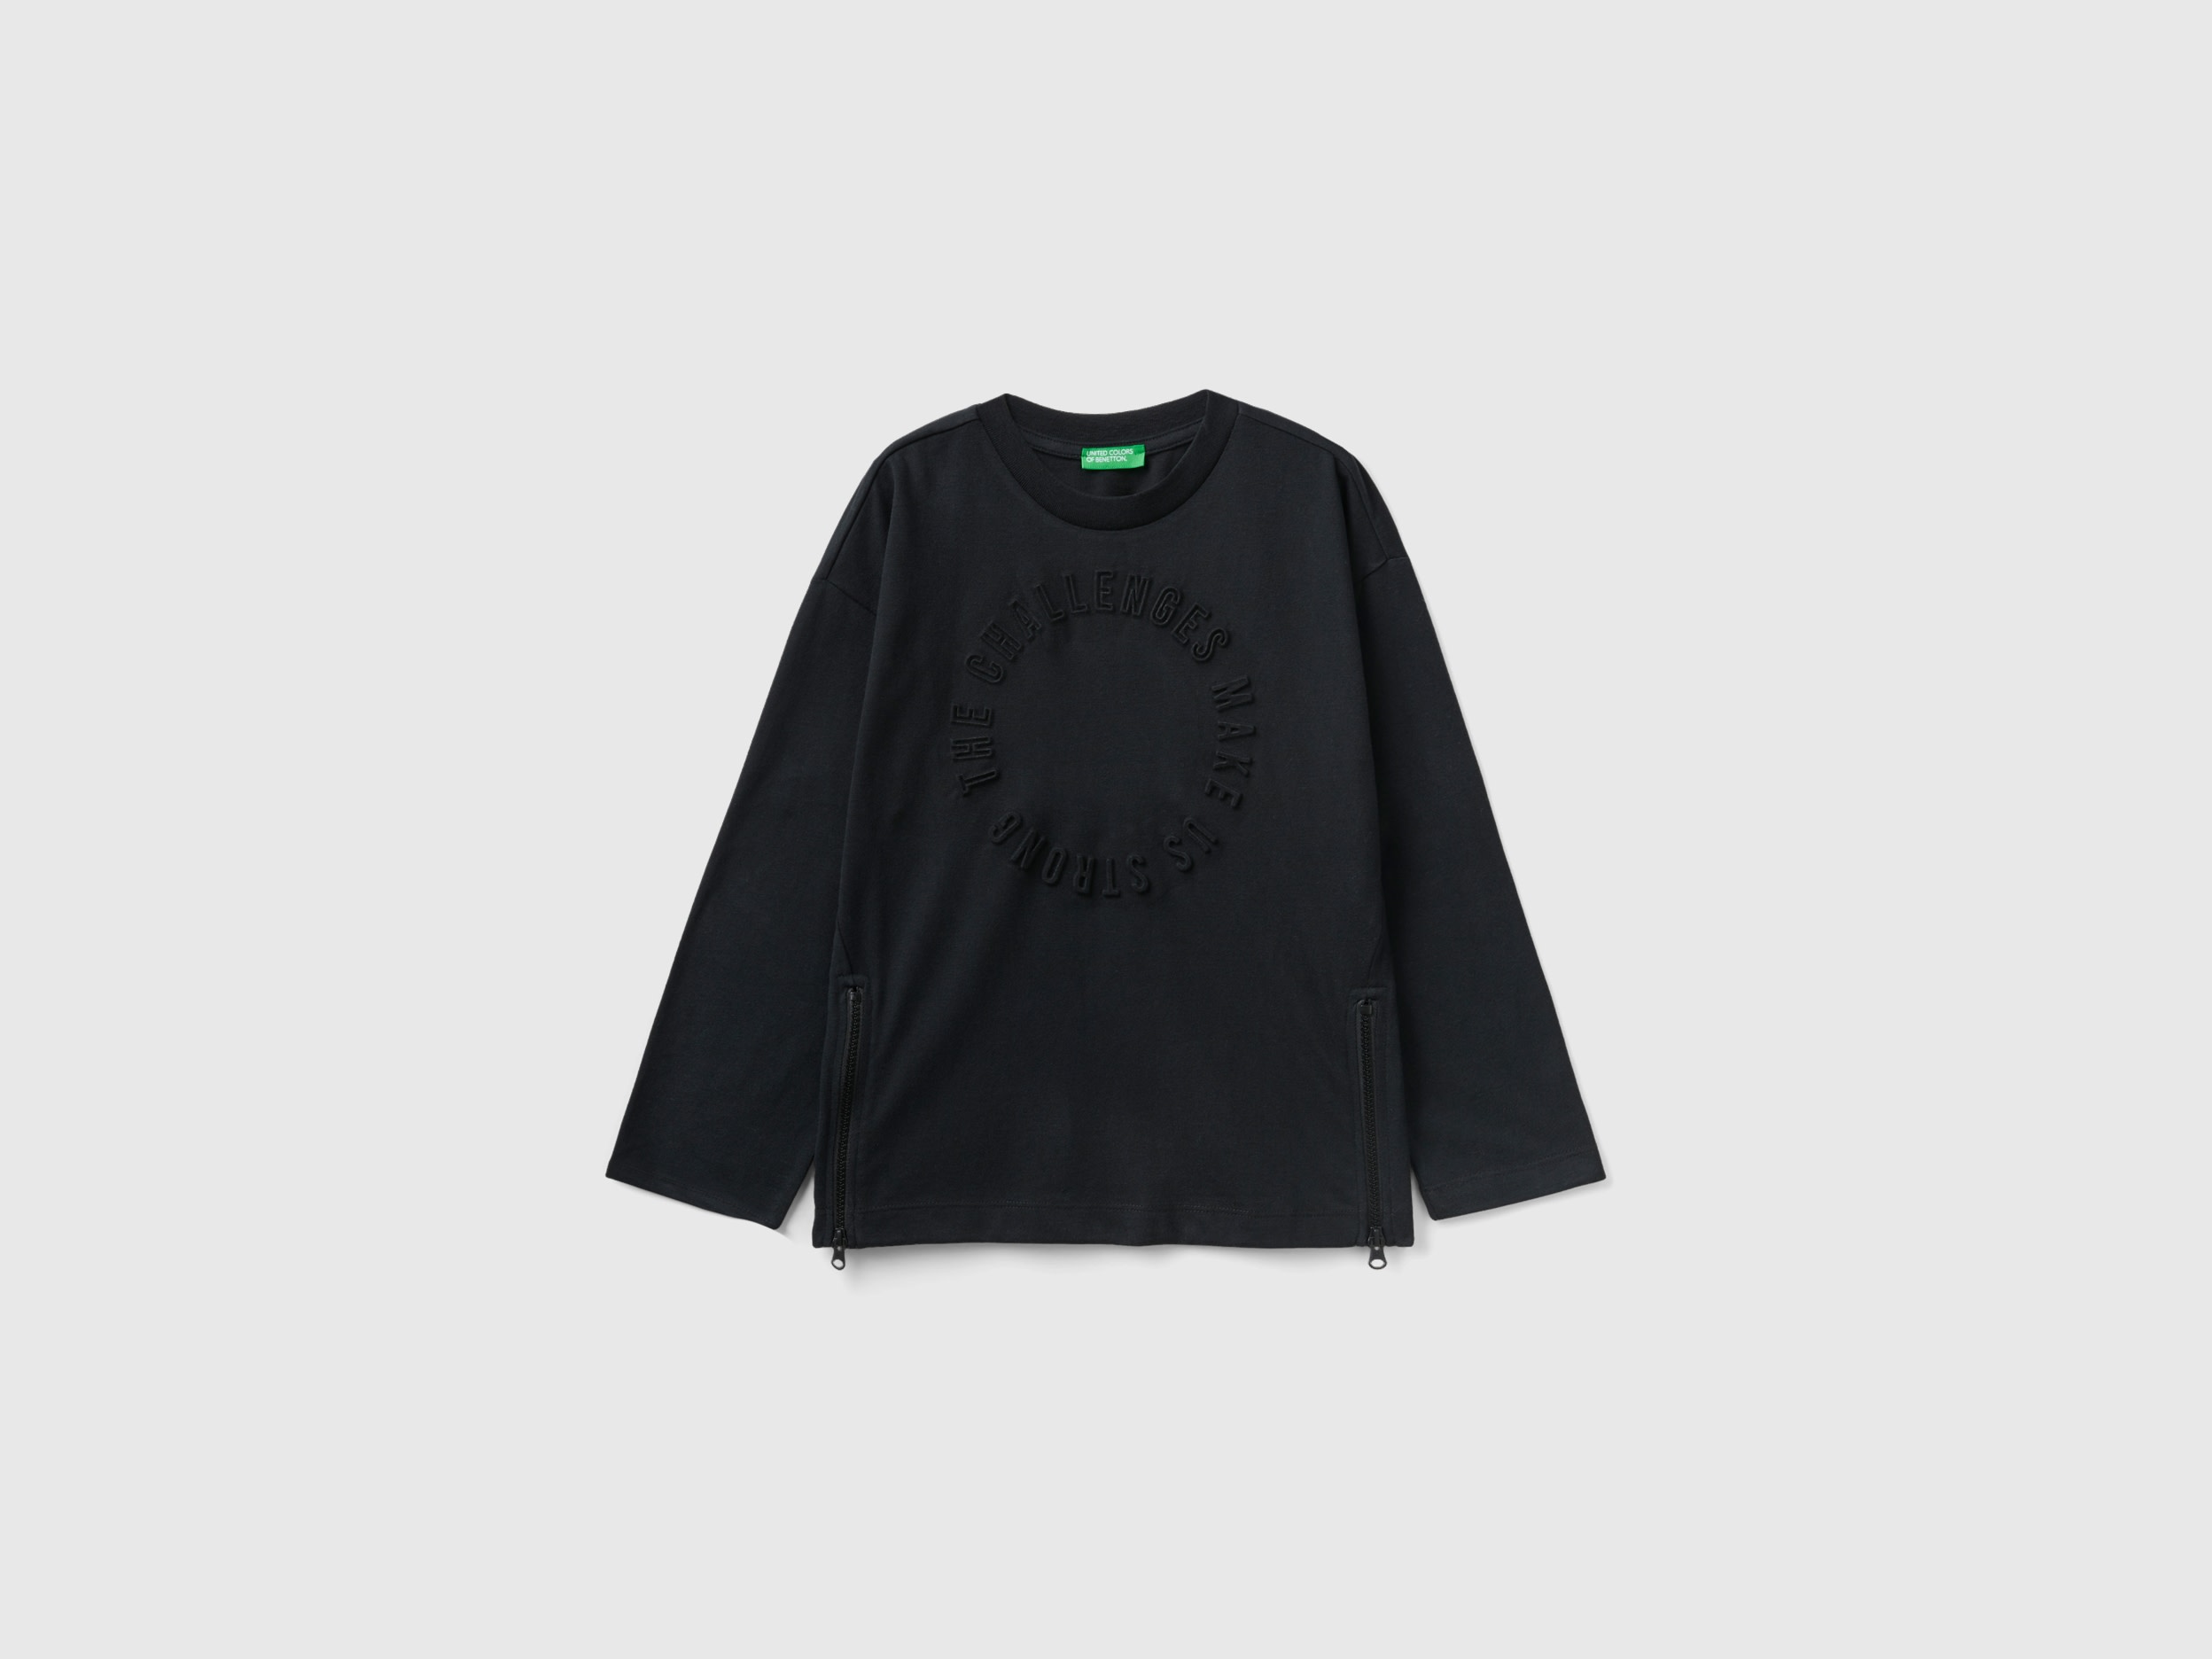 Benetton, Oversized Fit Sweatshirt With Embossed Print, size 2XL, Black, Kids